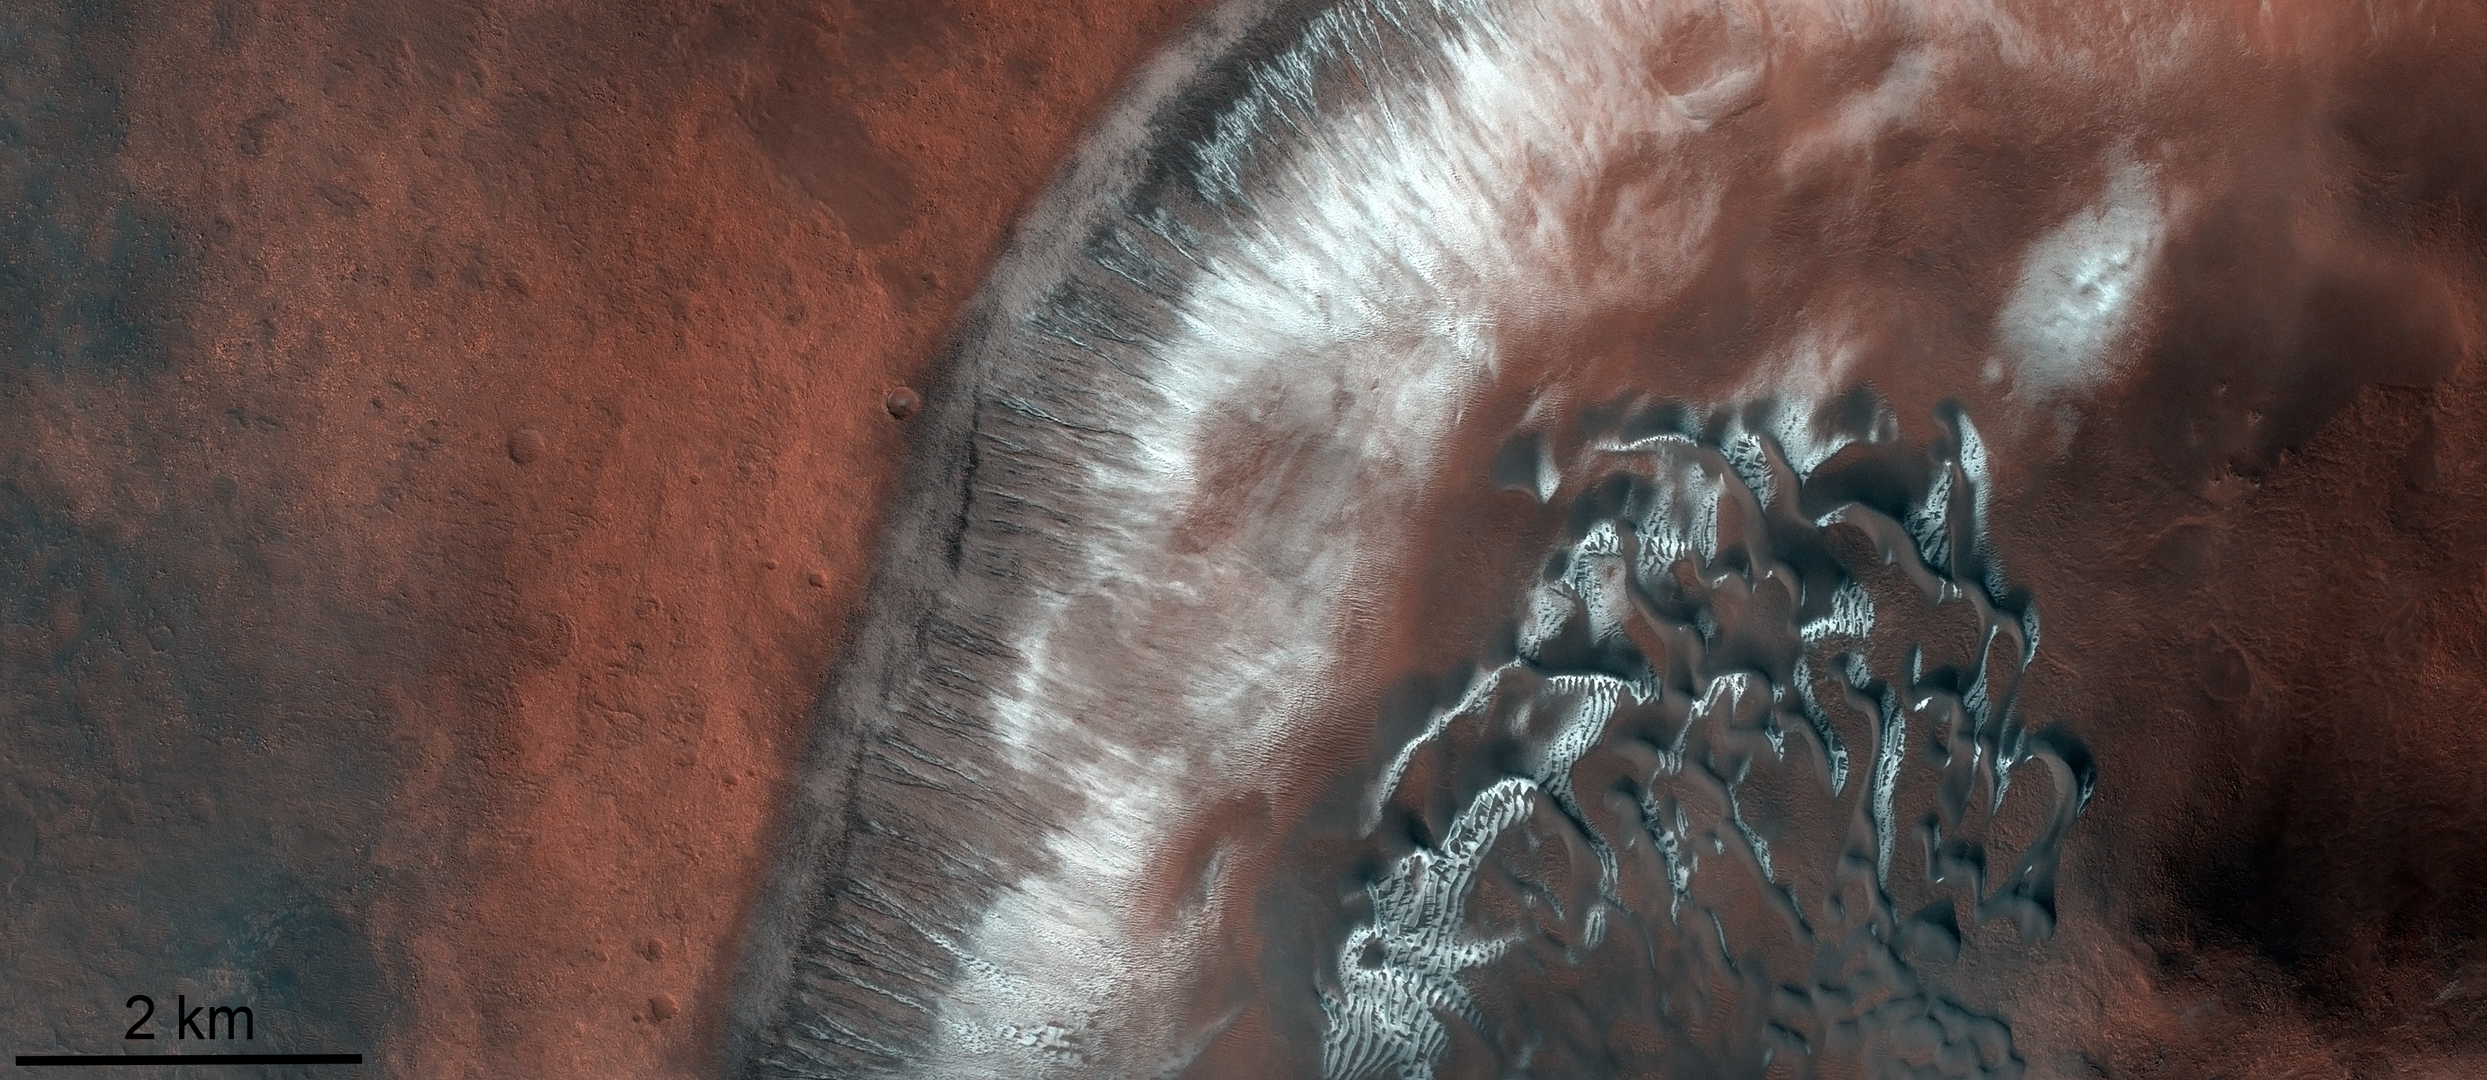 Dune fields in Mars' Green Crater